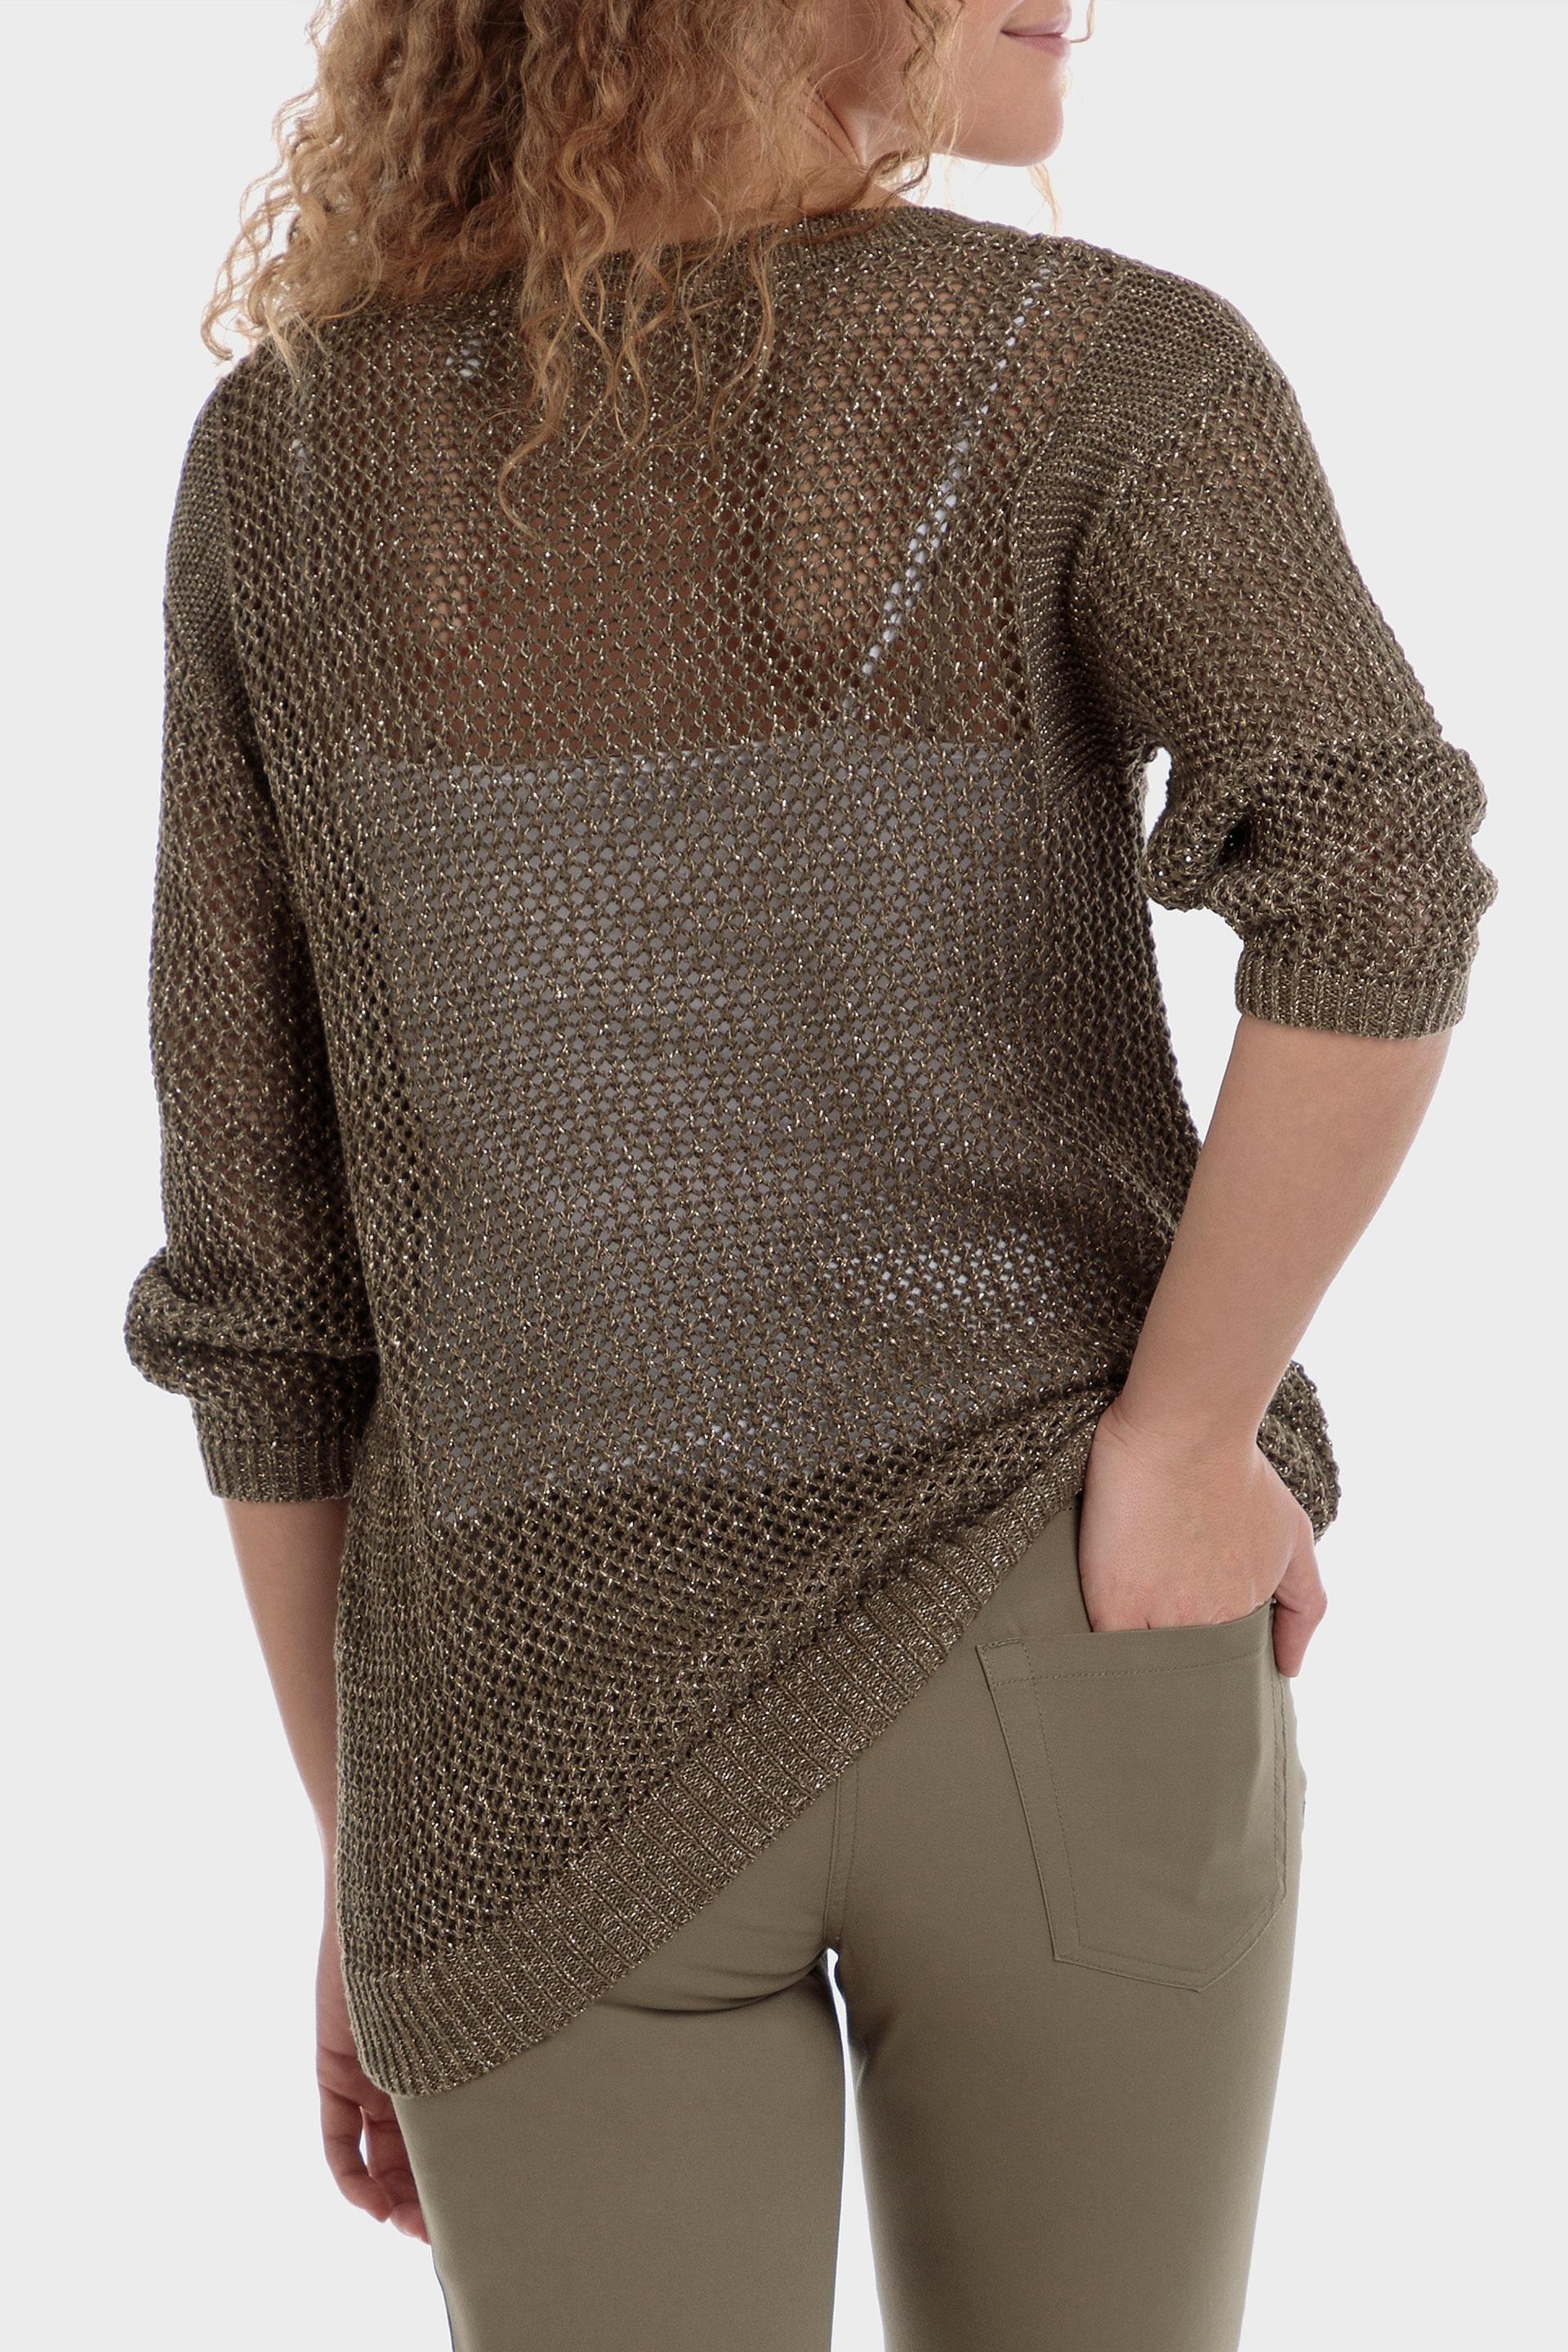 Punt Roma - Brown Openwork Sweater